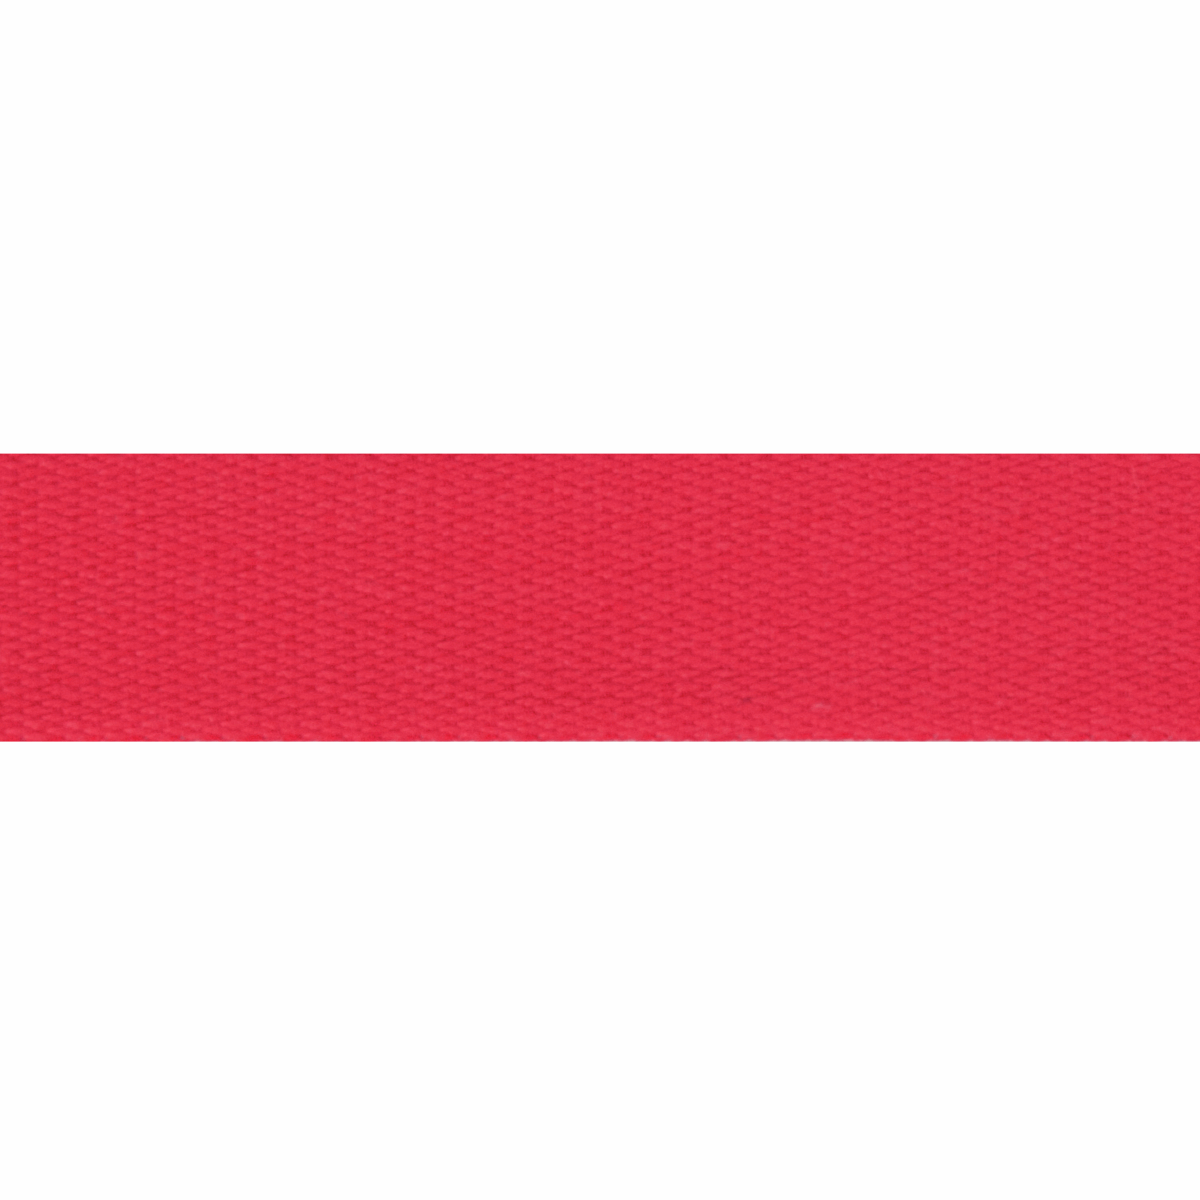 Cotton Tape Premium Quality: Red: 14mm wide. Price per metre.